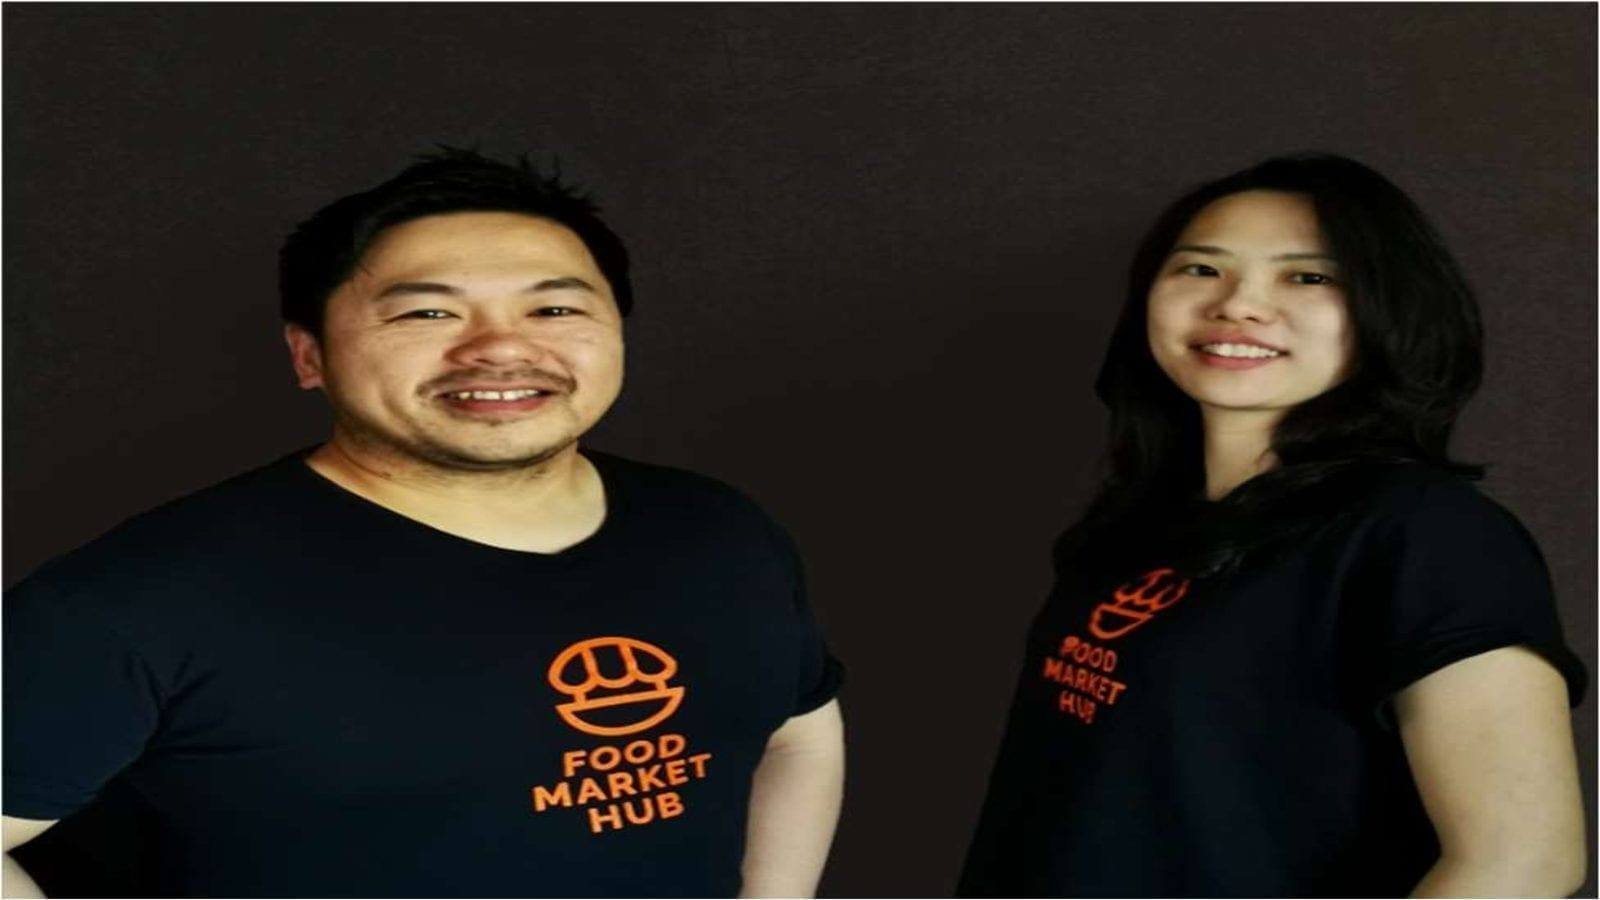 Malaysian startup Food Market Hub raises US$4m to increase market share, expand into new markets